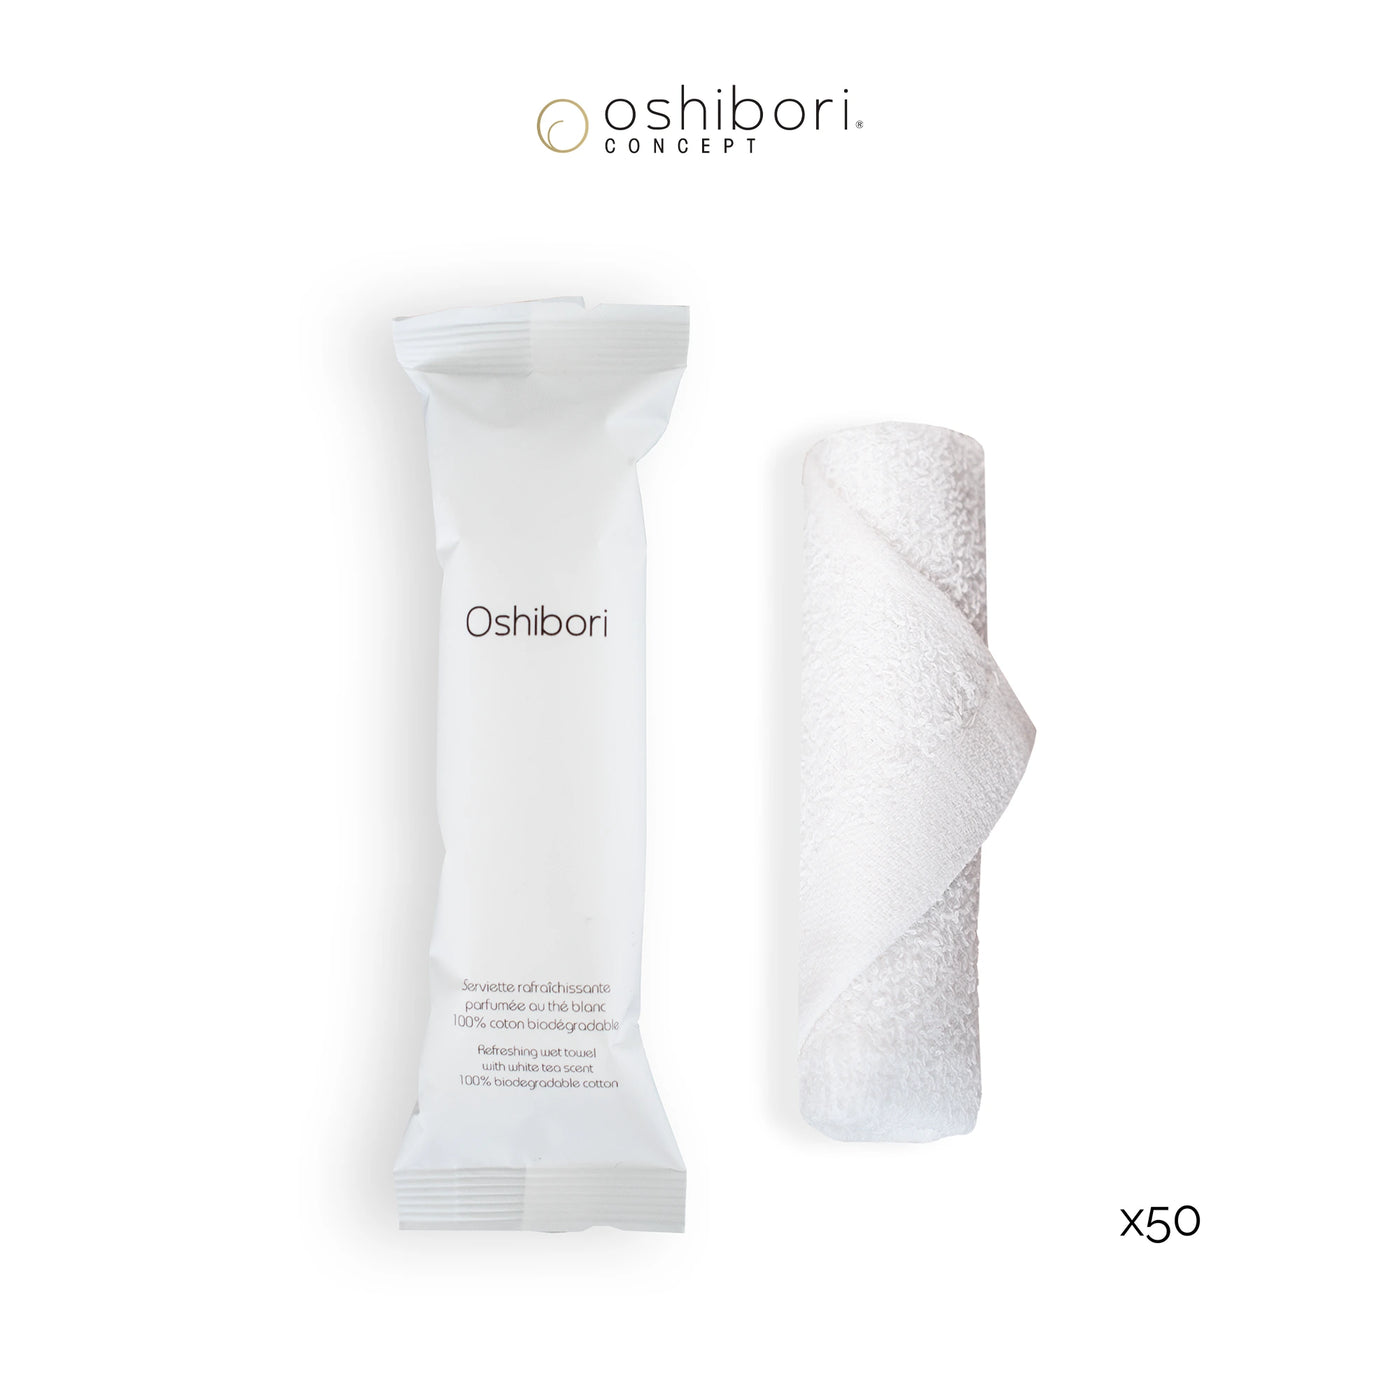 Oshibori rinfrescante - 15 grammi - Bianco (x50)